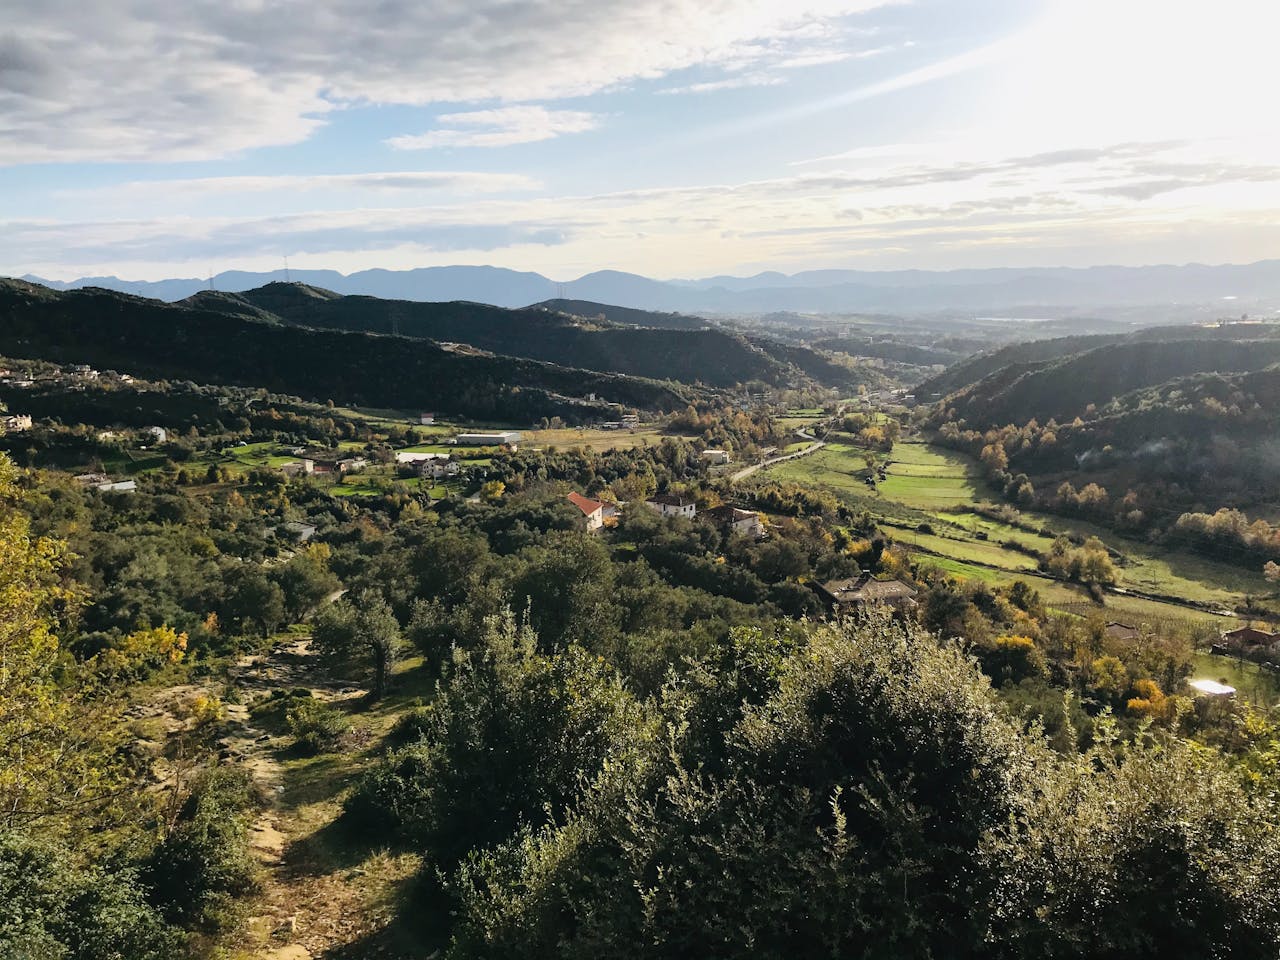 View from Mount Dajt in Tirana, Albania